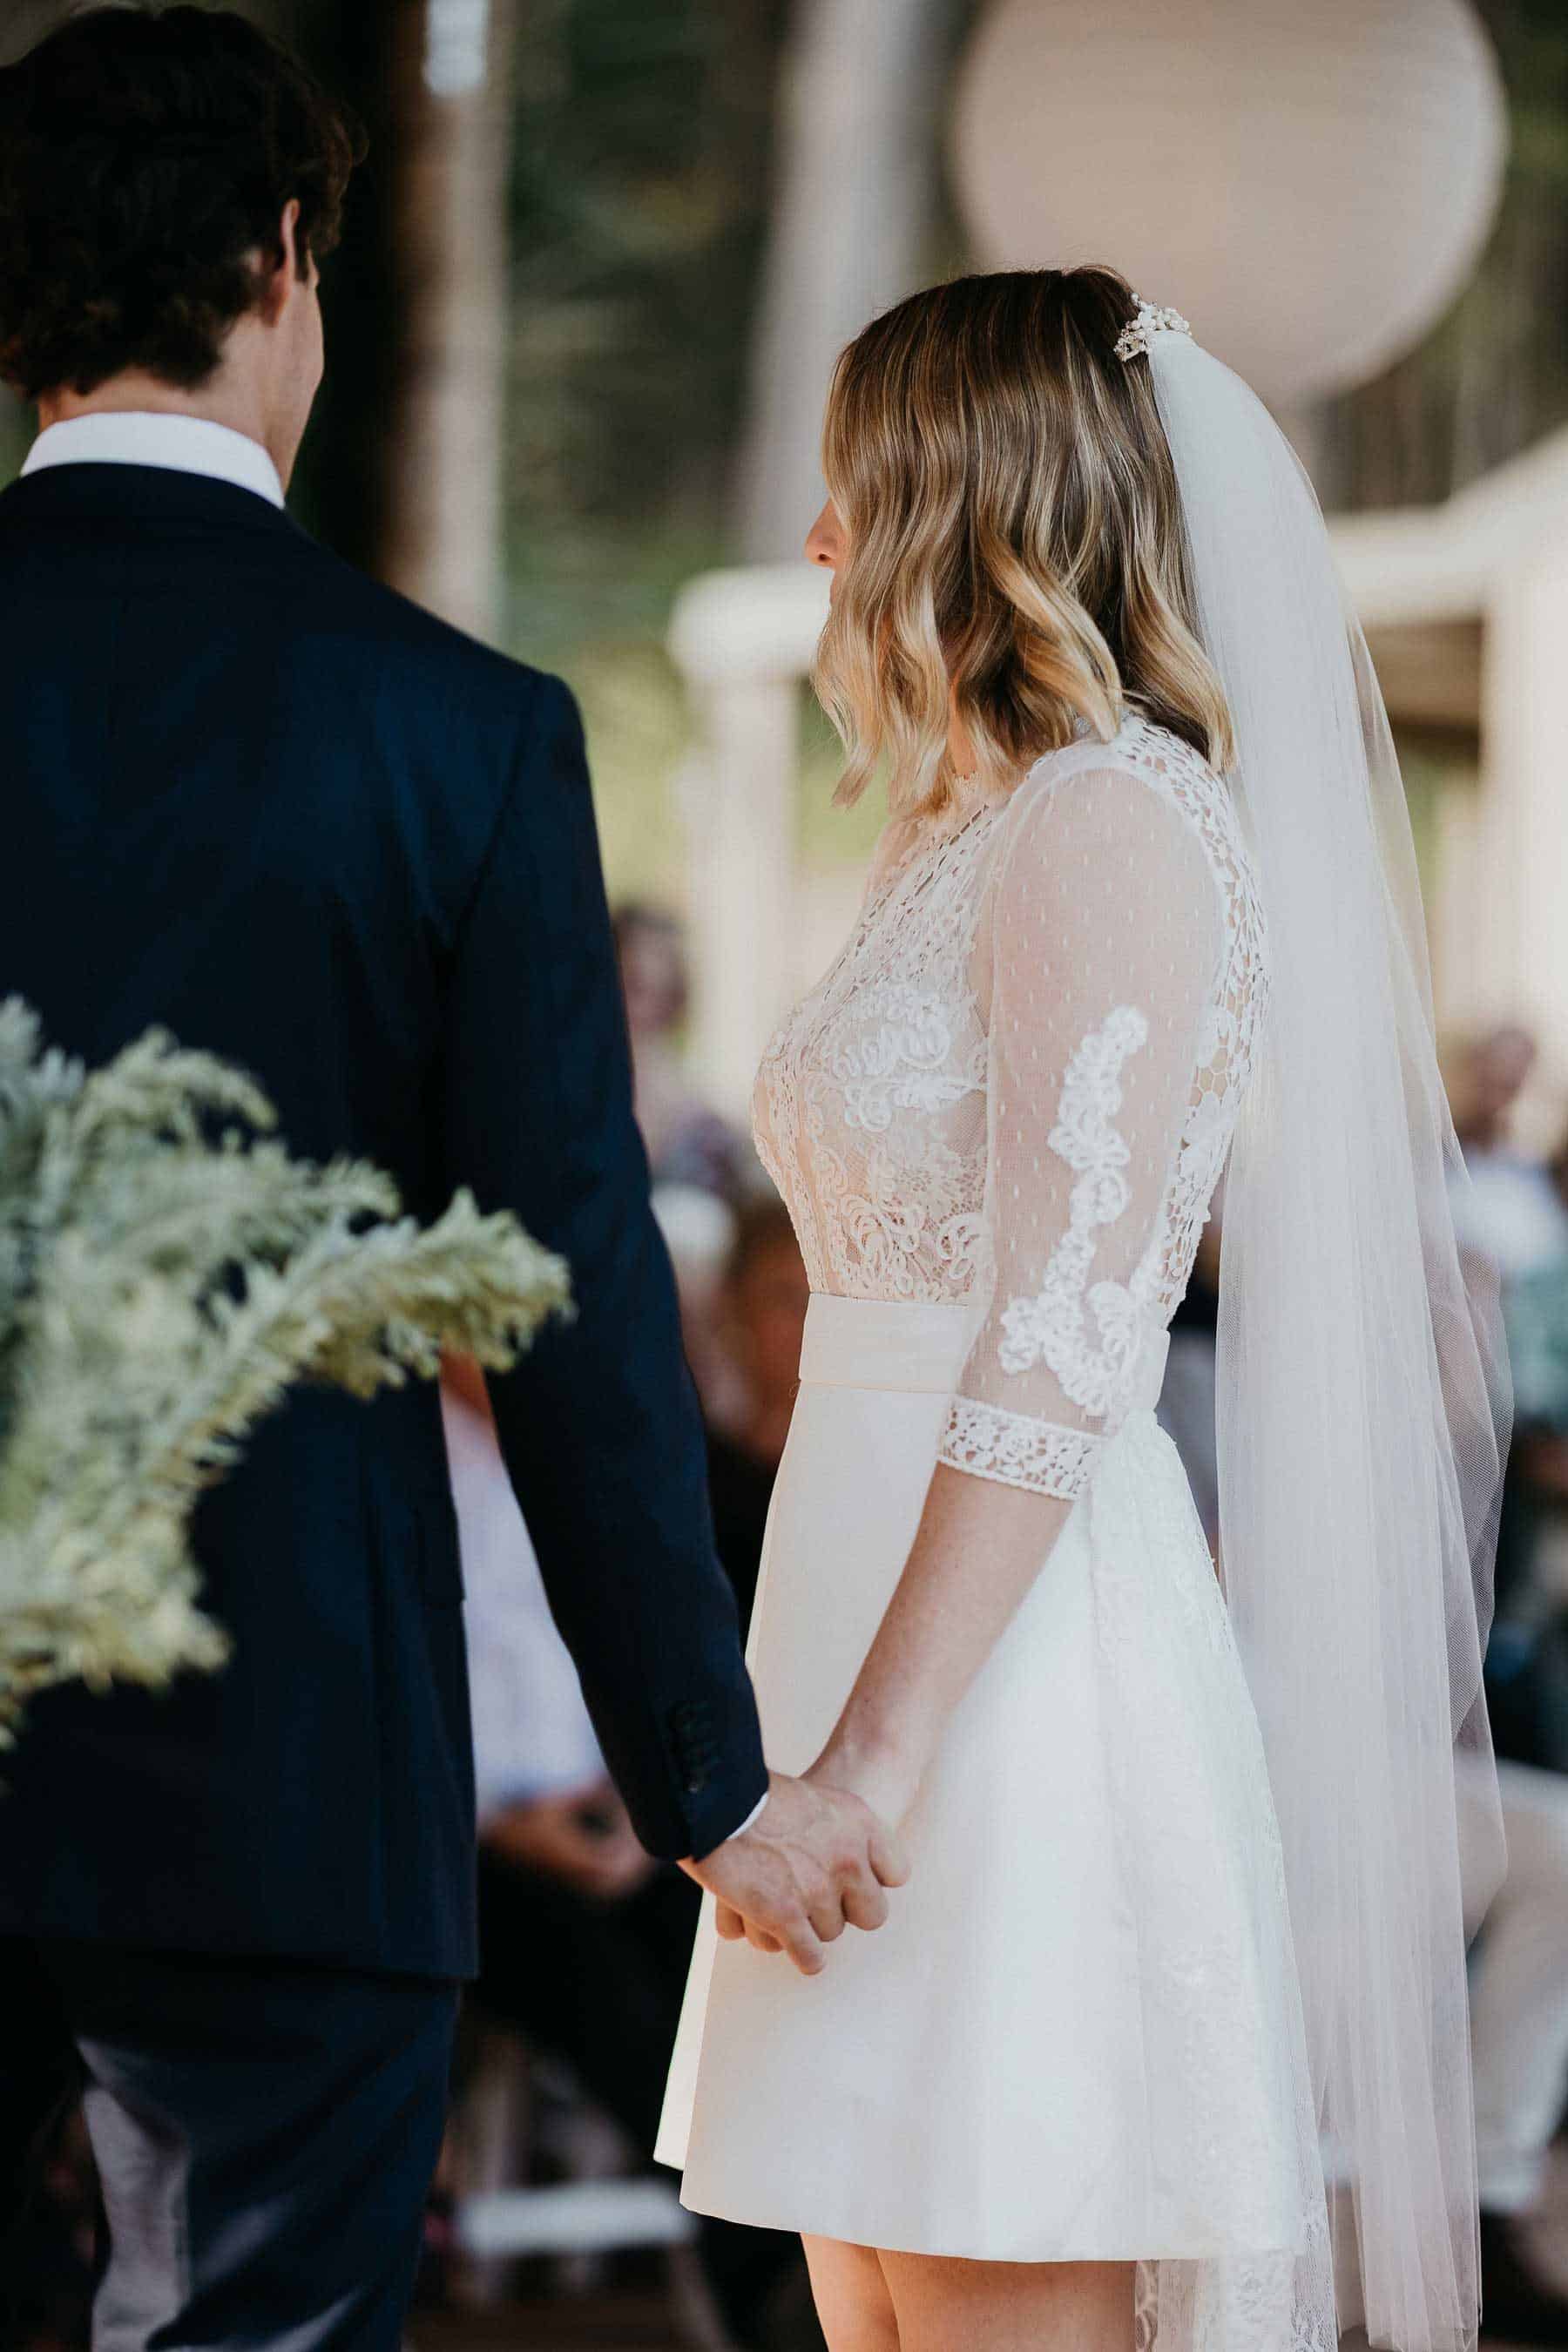 Best wedding dresses of 2019 - simple long sleeve short wedding dress